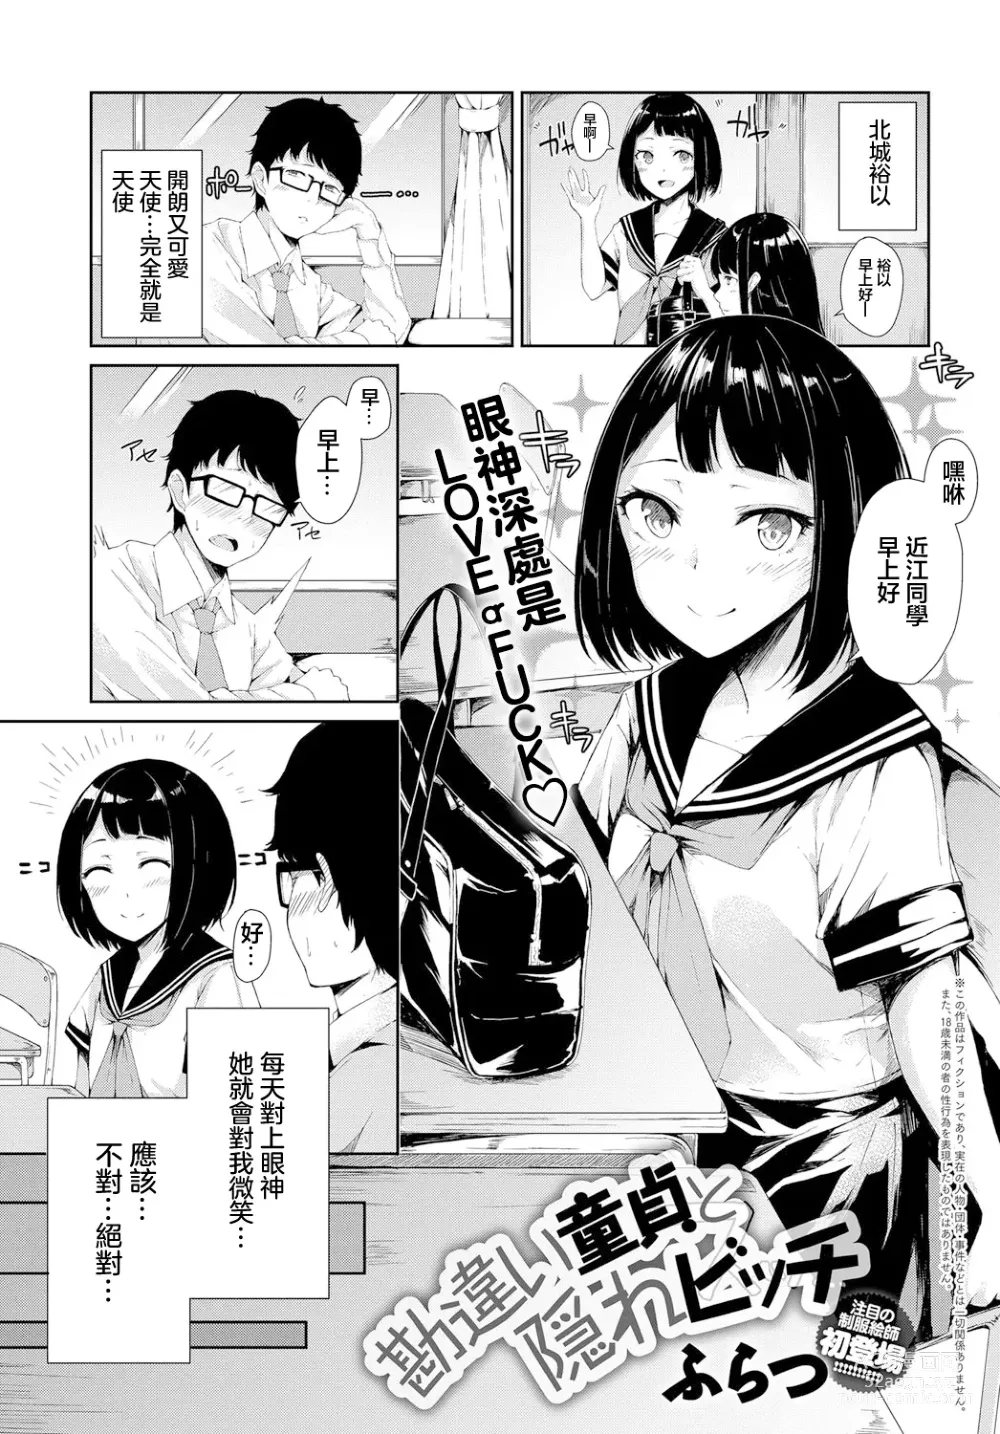 Page 2 of manga 會錯意處男和隱藏婊子